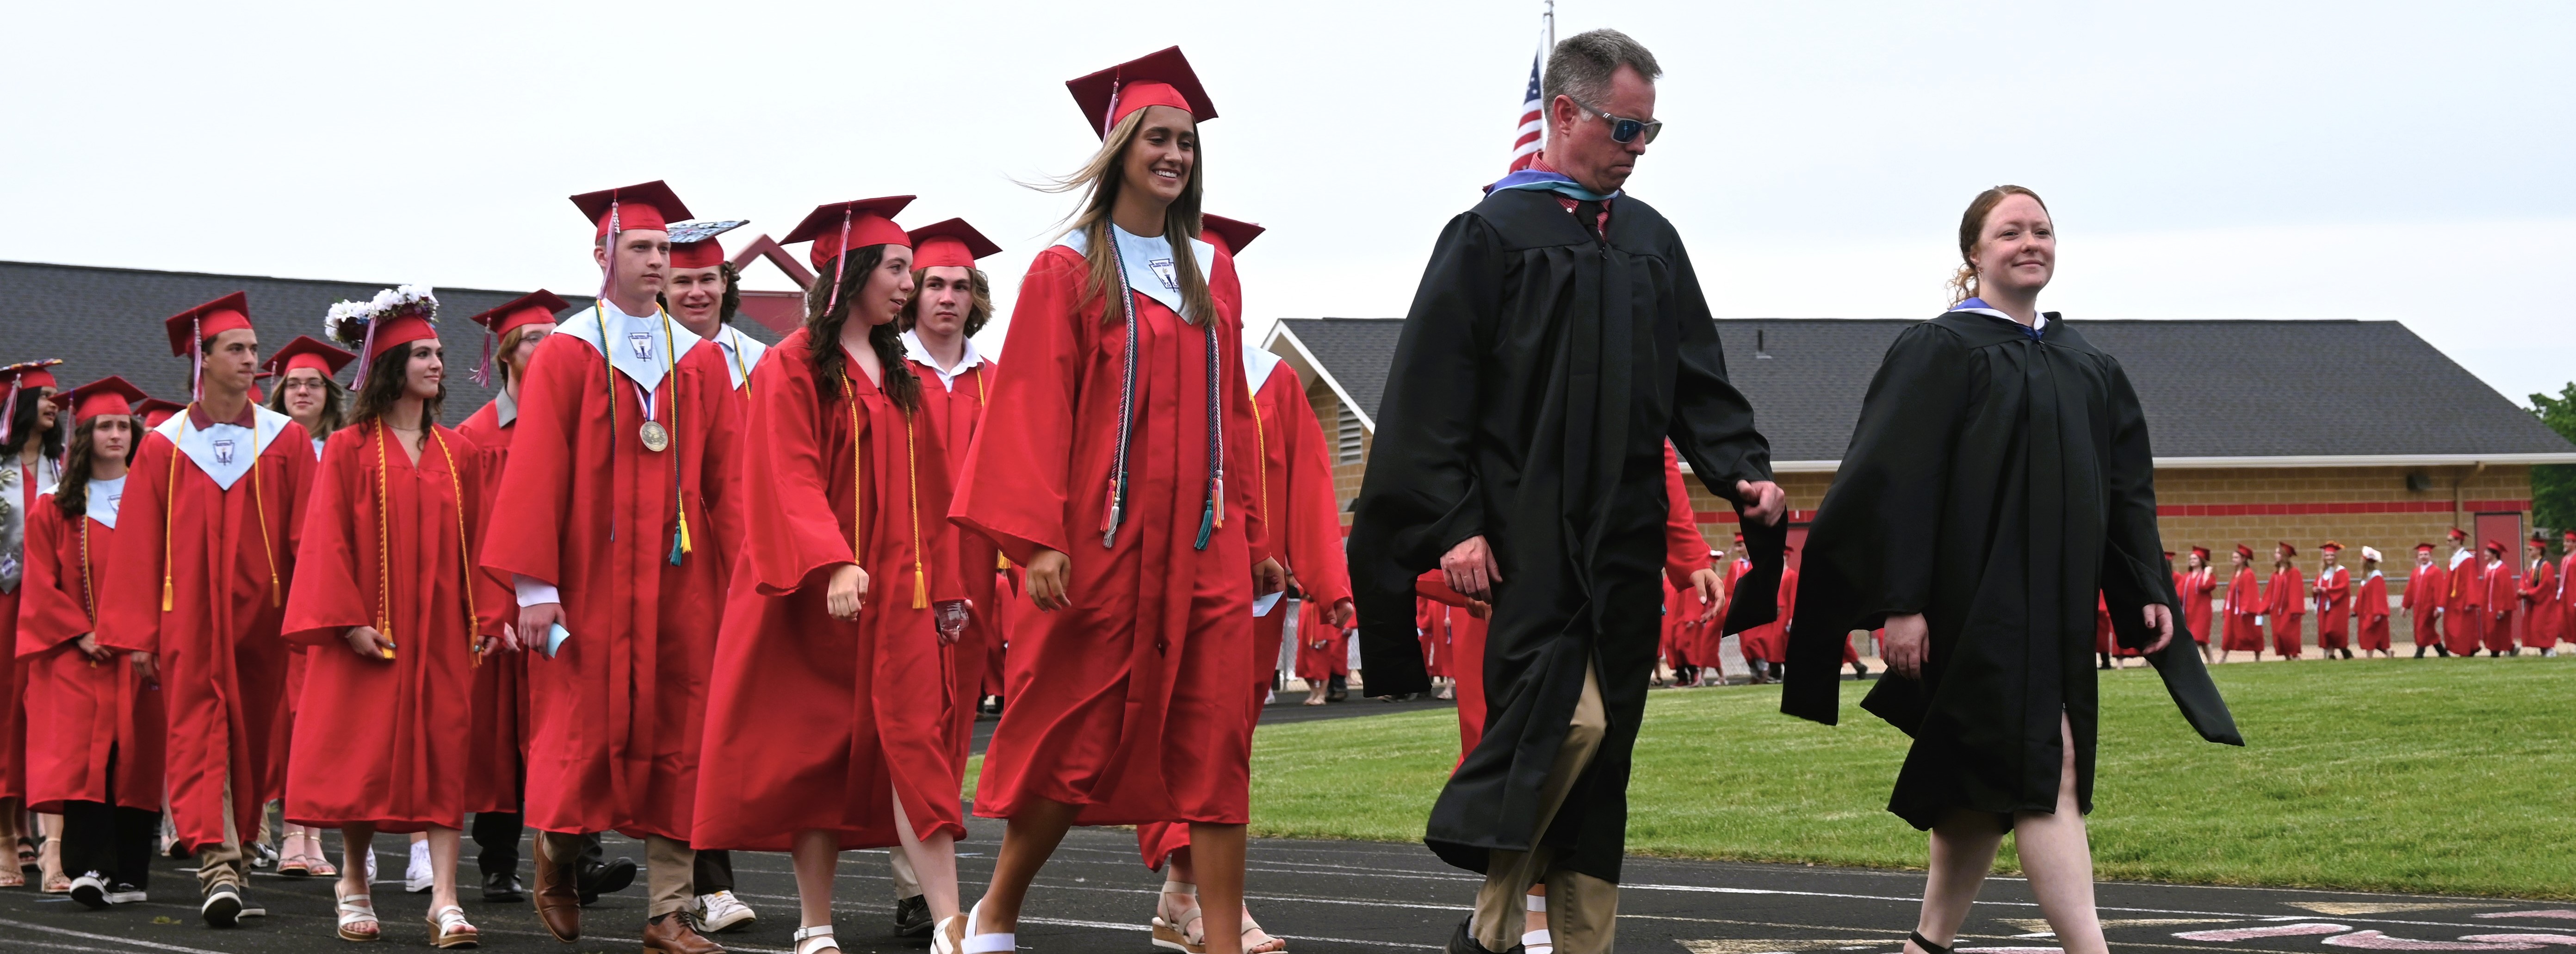 graduates walking together